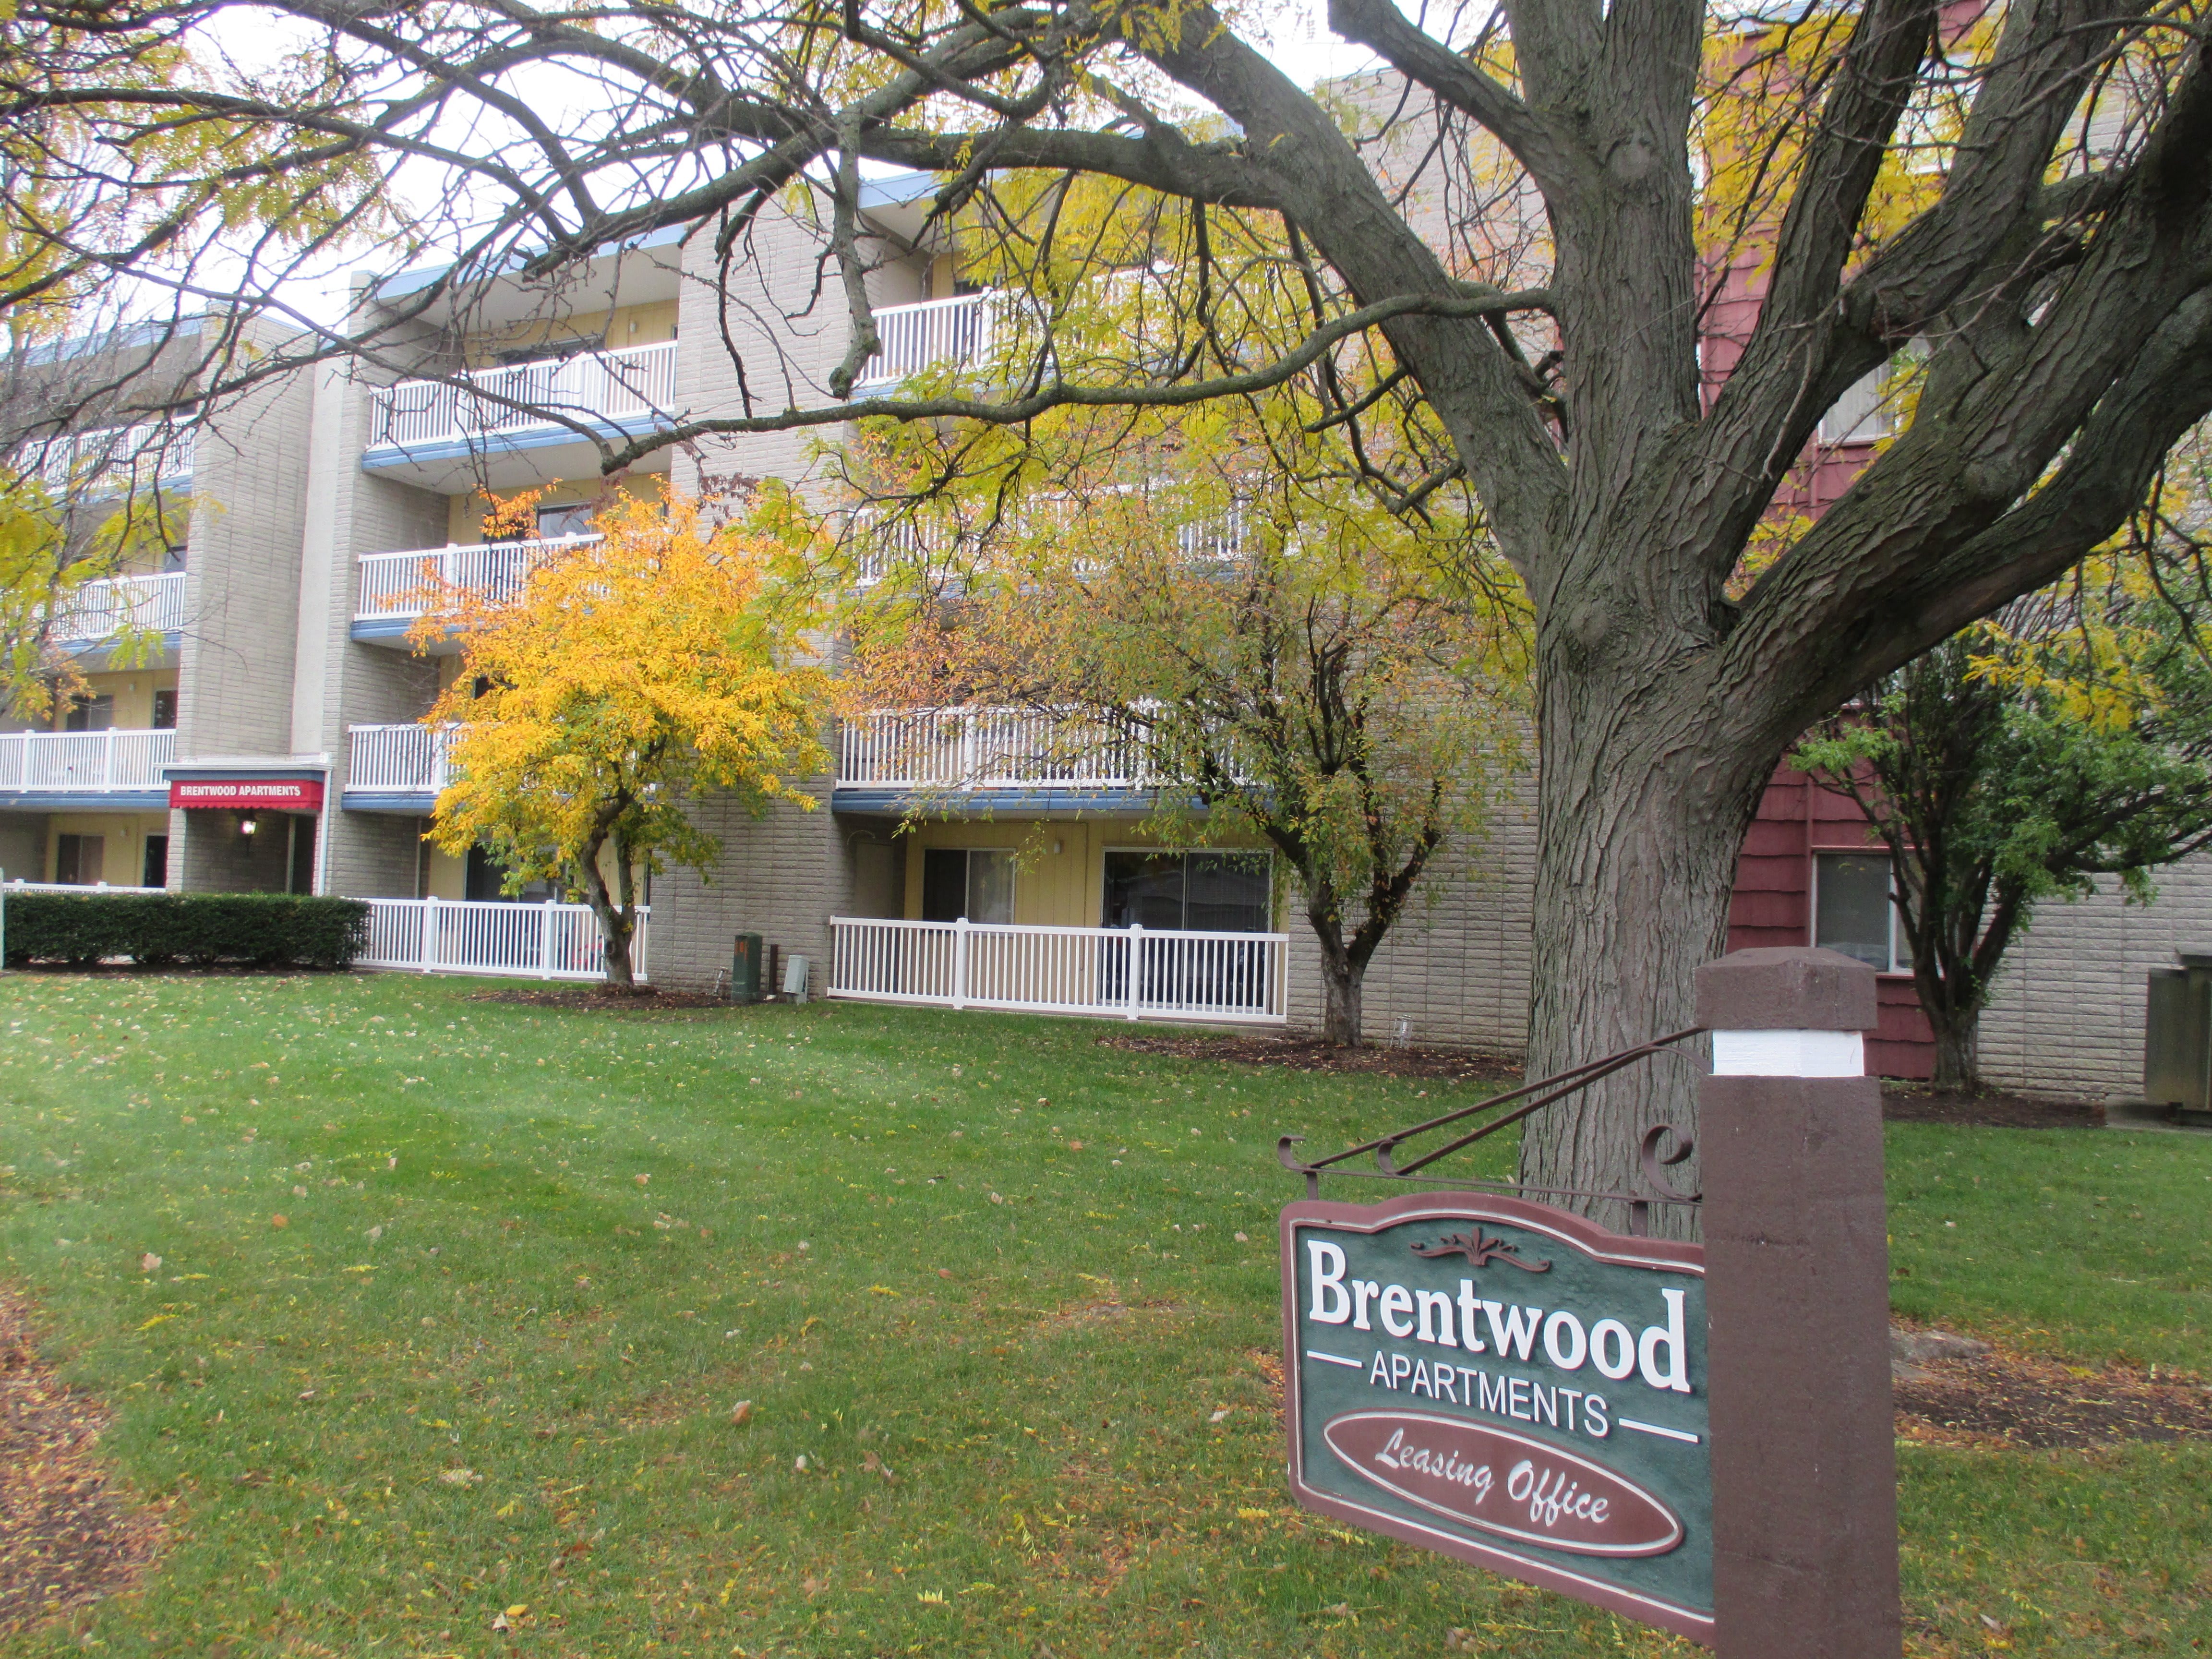 Brentwood Senior Apartments